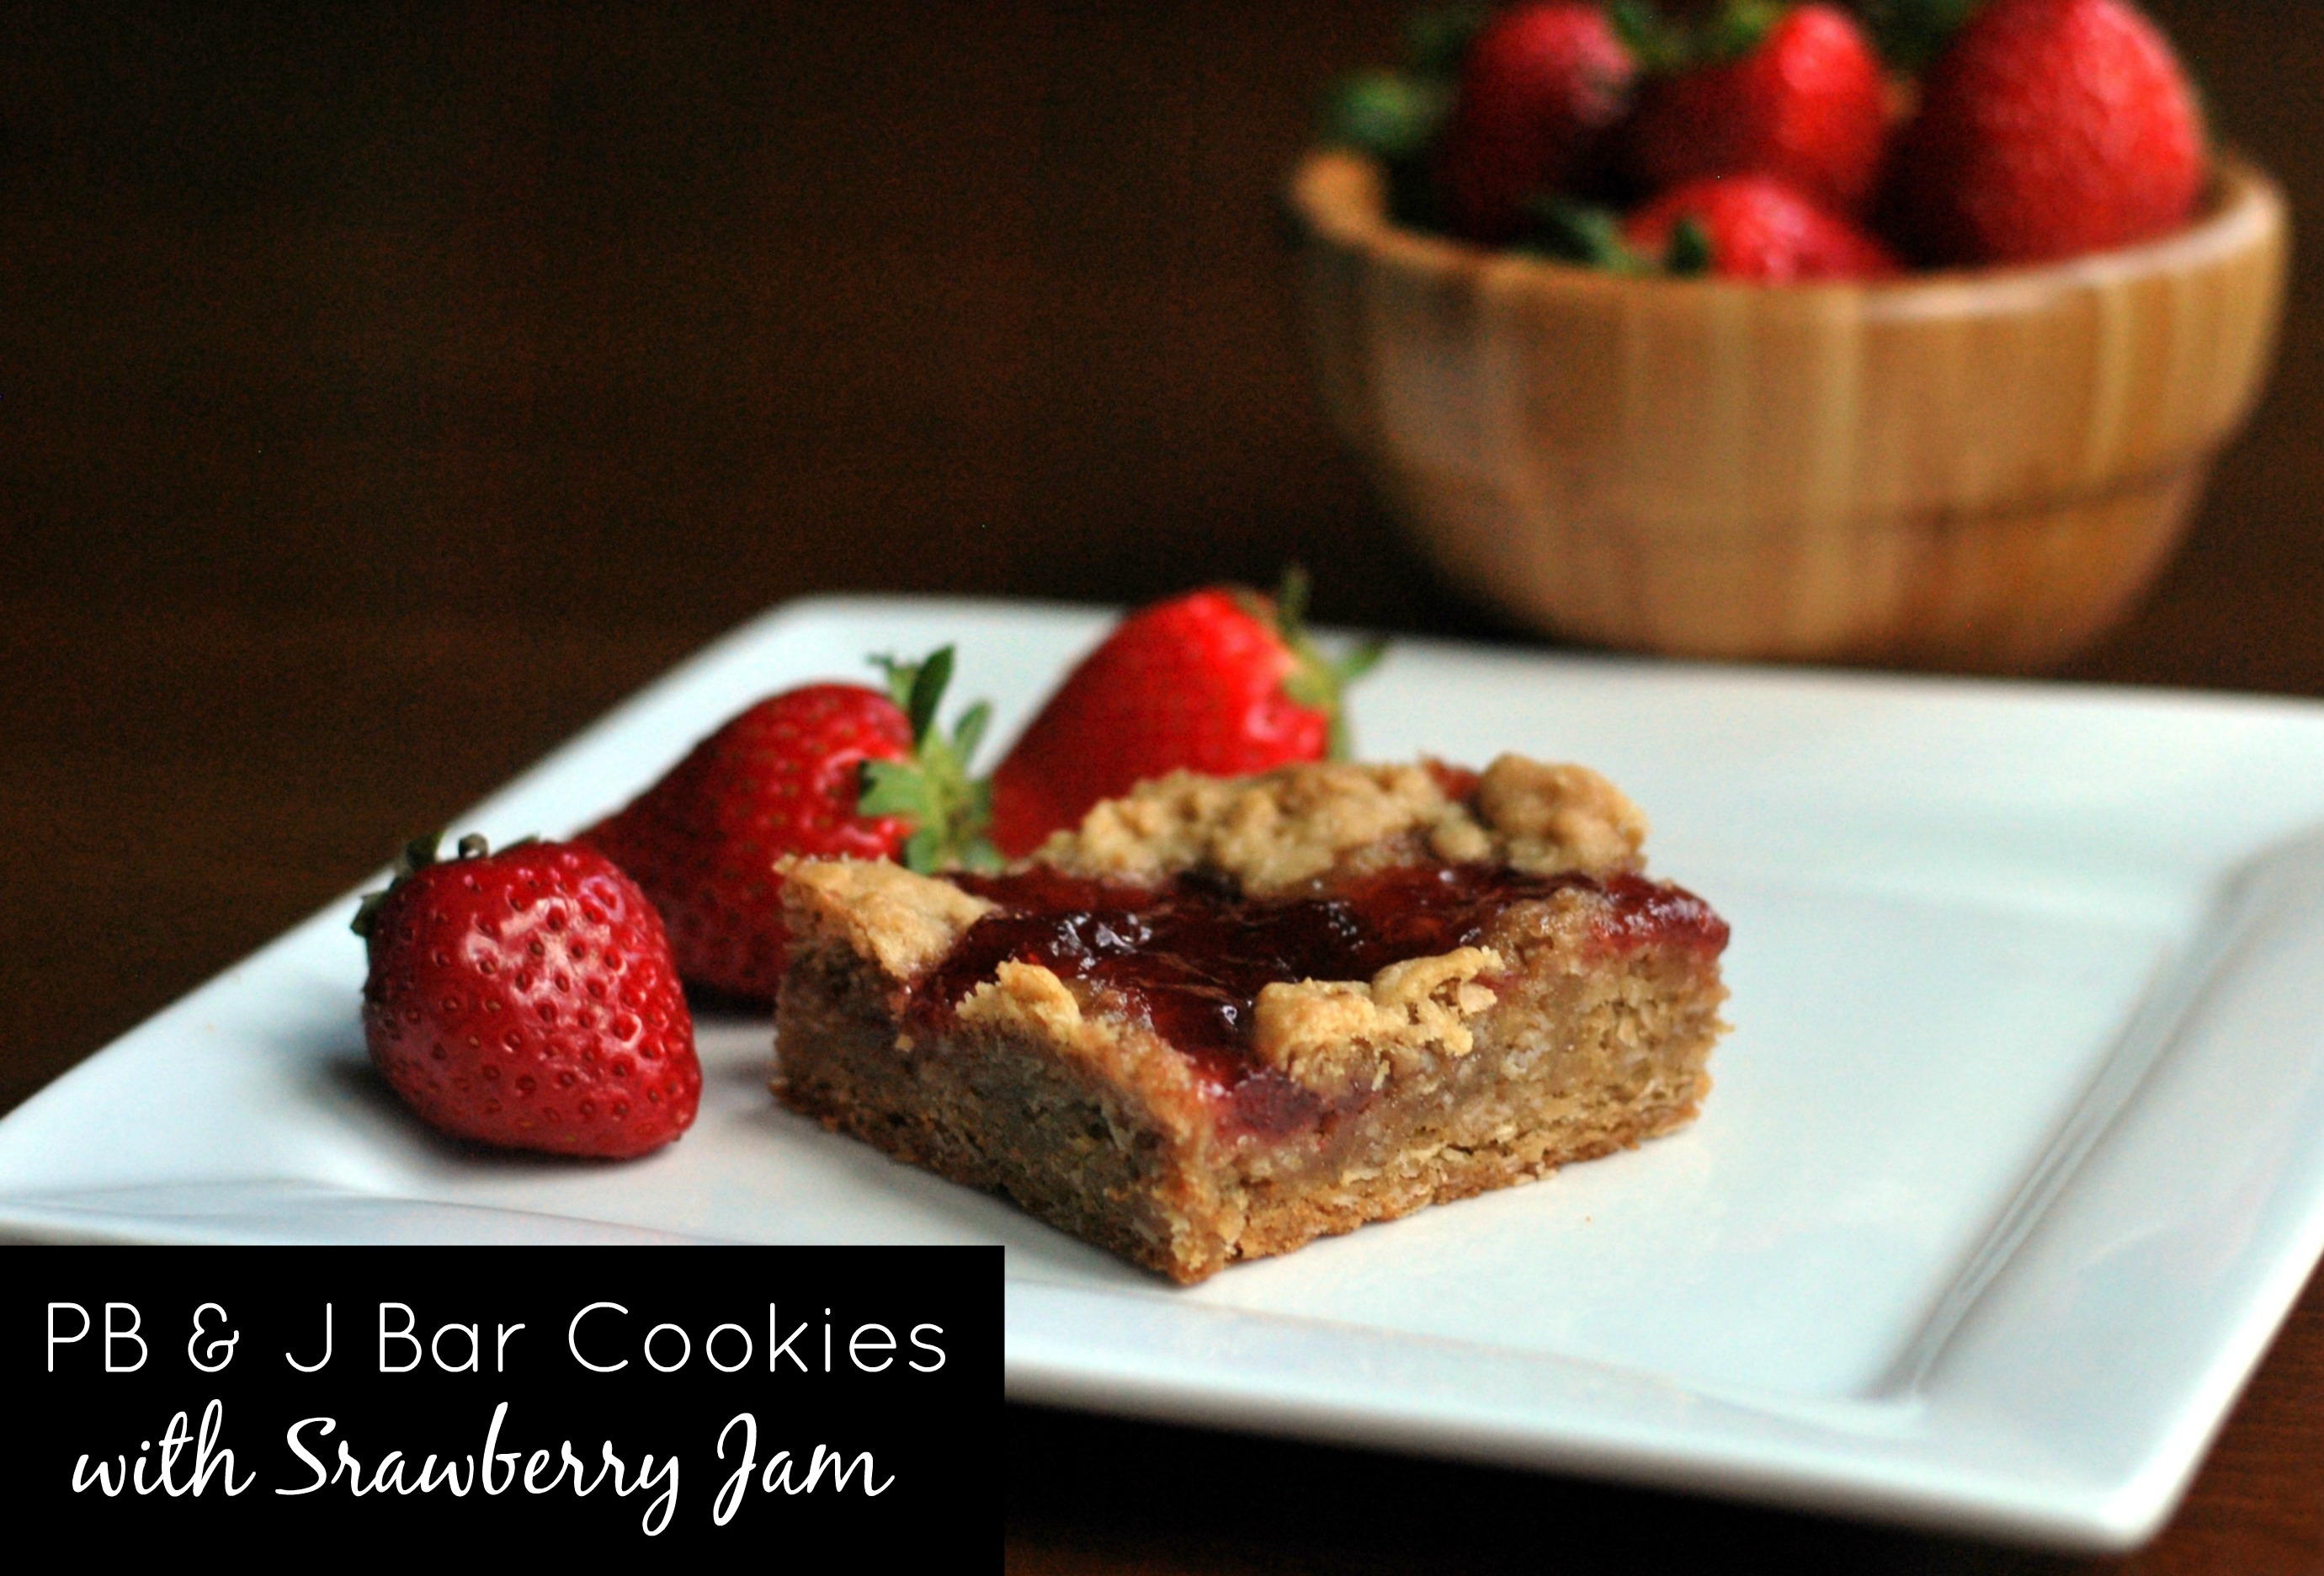 PB & J Bar Cookies with Strawberry Jam